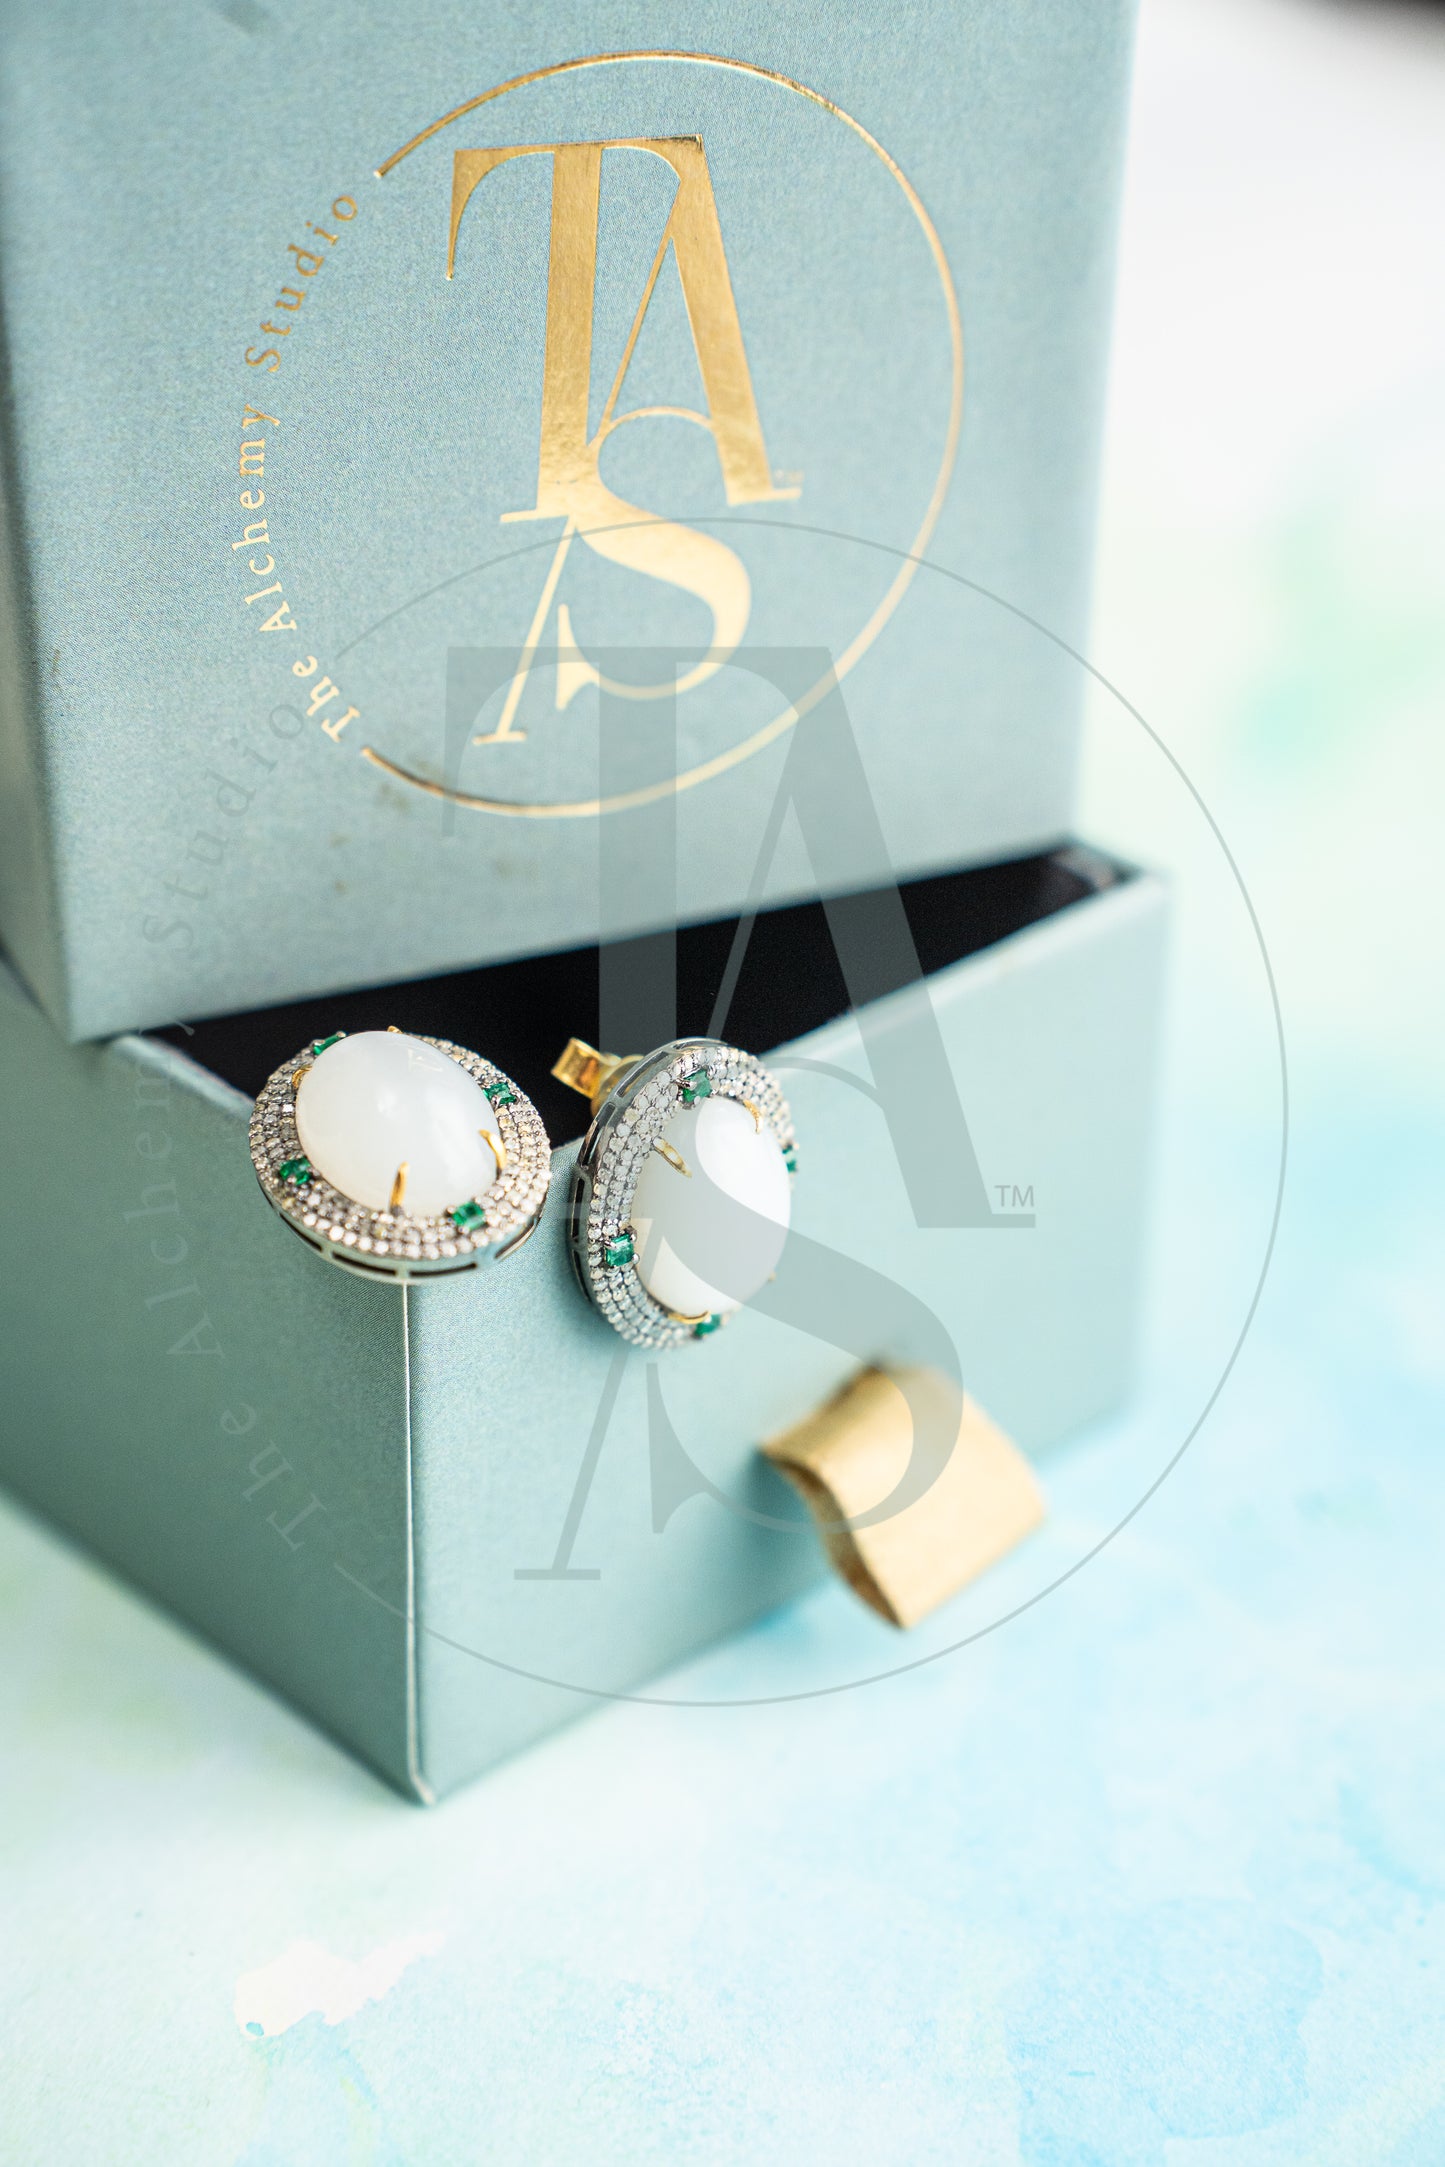 Inara Moonstone and Emerald  Earrings